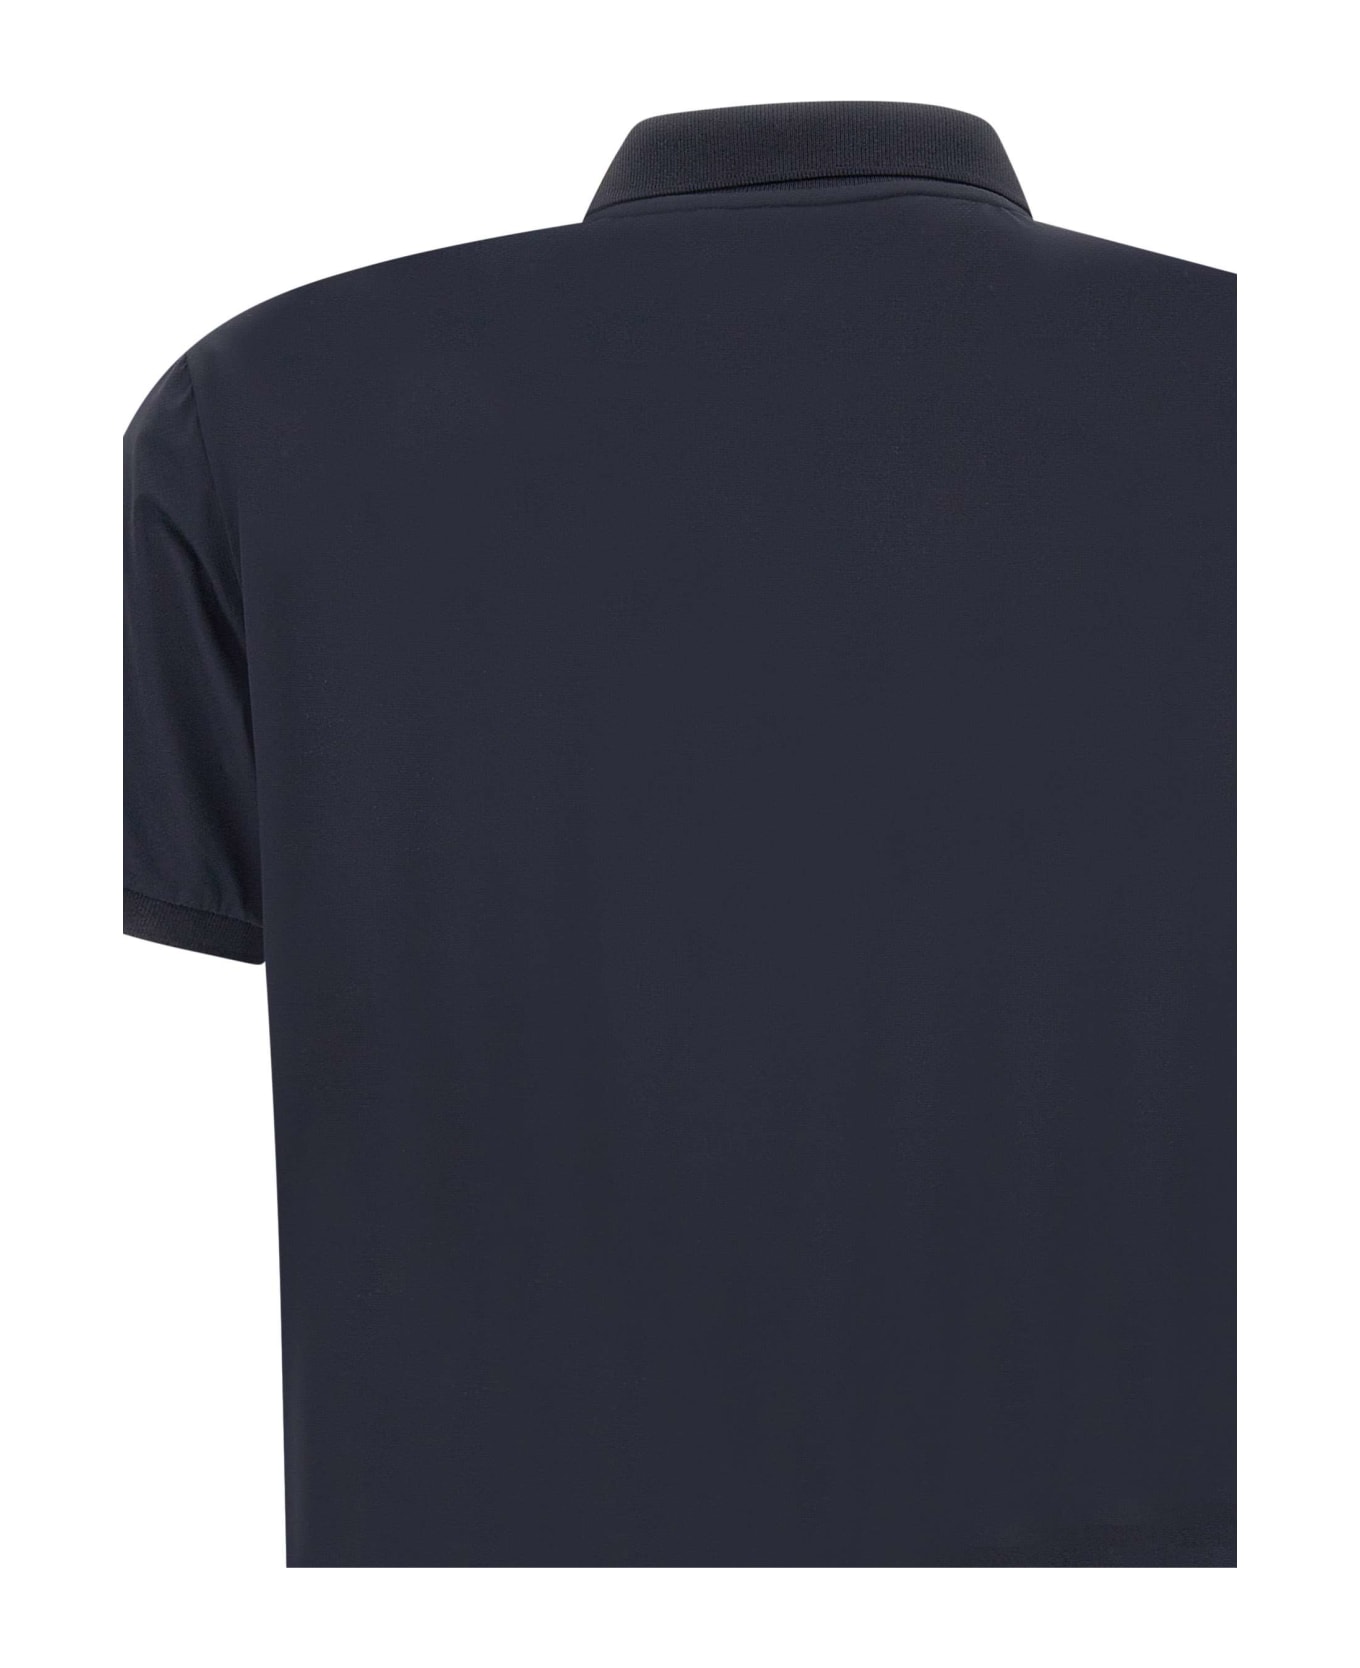 RRD - Roberto Ricci Design "gdy" Cotton Oxford Polo Shirt - BLUE ポロシャツ